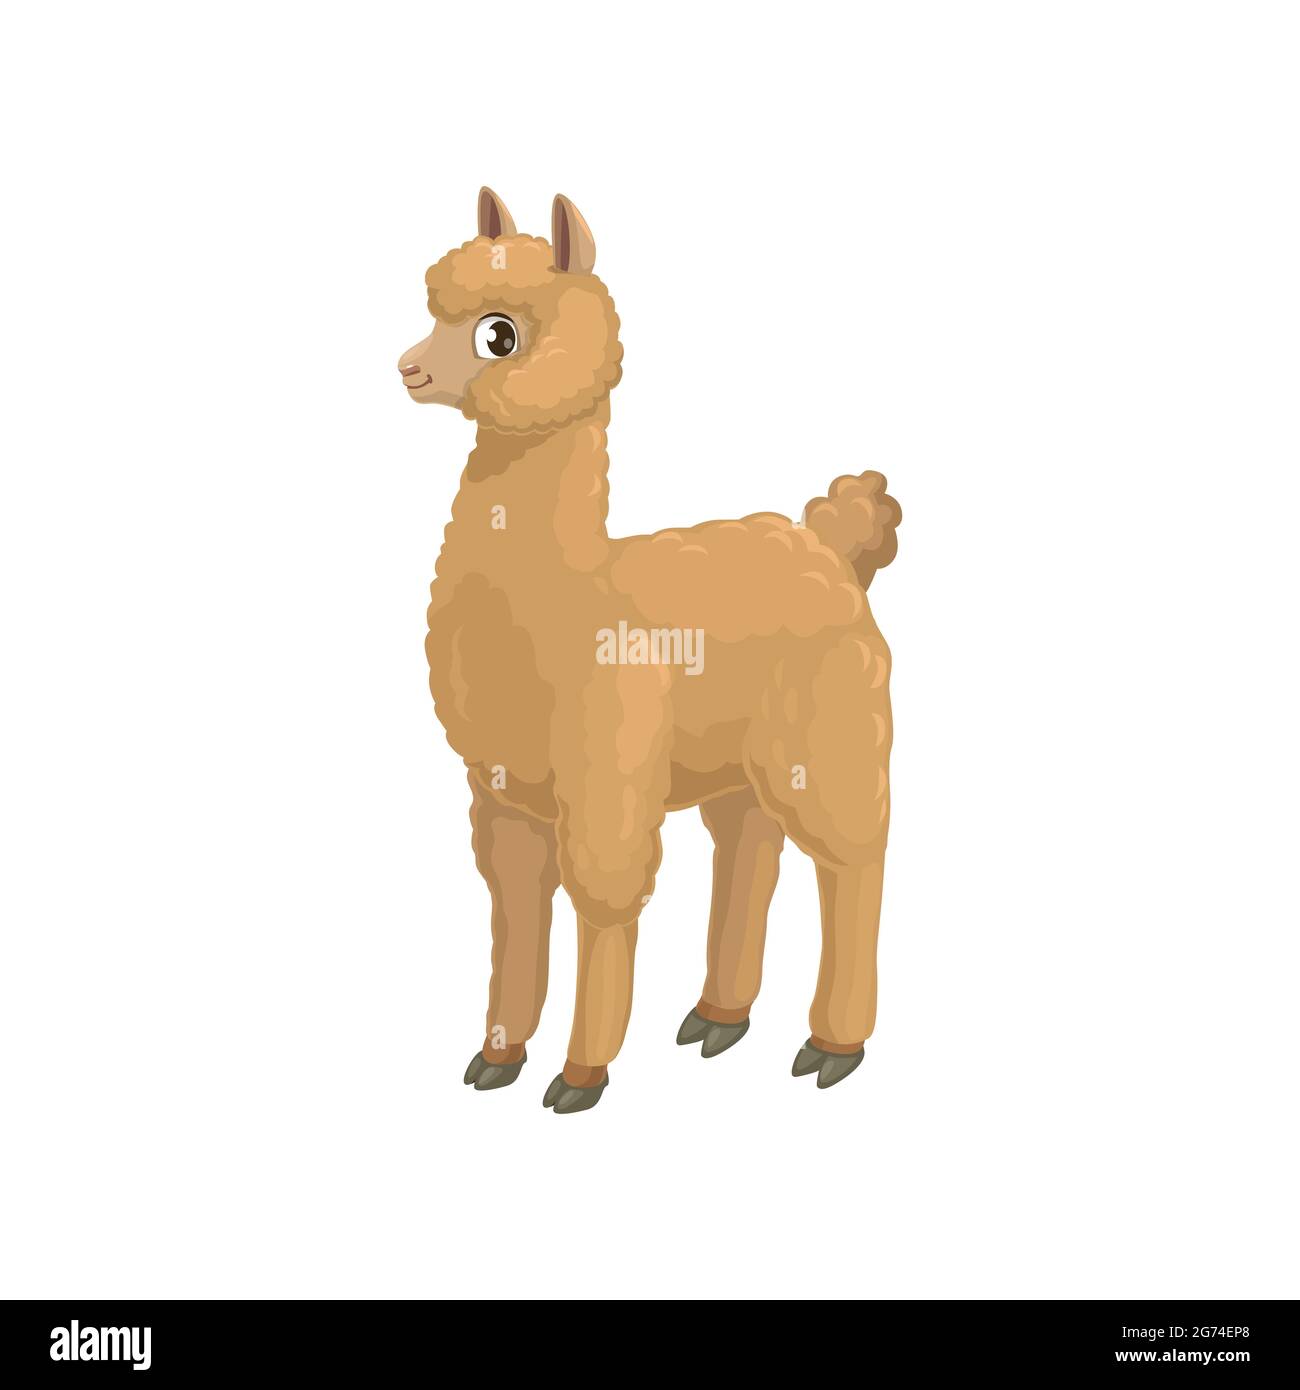 Lama alpaca isoliertes Cartoon-Tier der Kamelfamilie, huofed quanaco. Vektor beige Alpaka oder lama, südamerikanisches domestiziertes Packtier. Lama Baby Stock Vektor